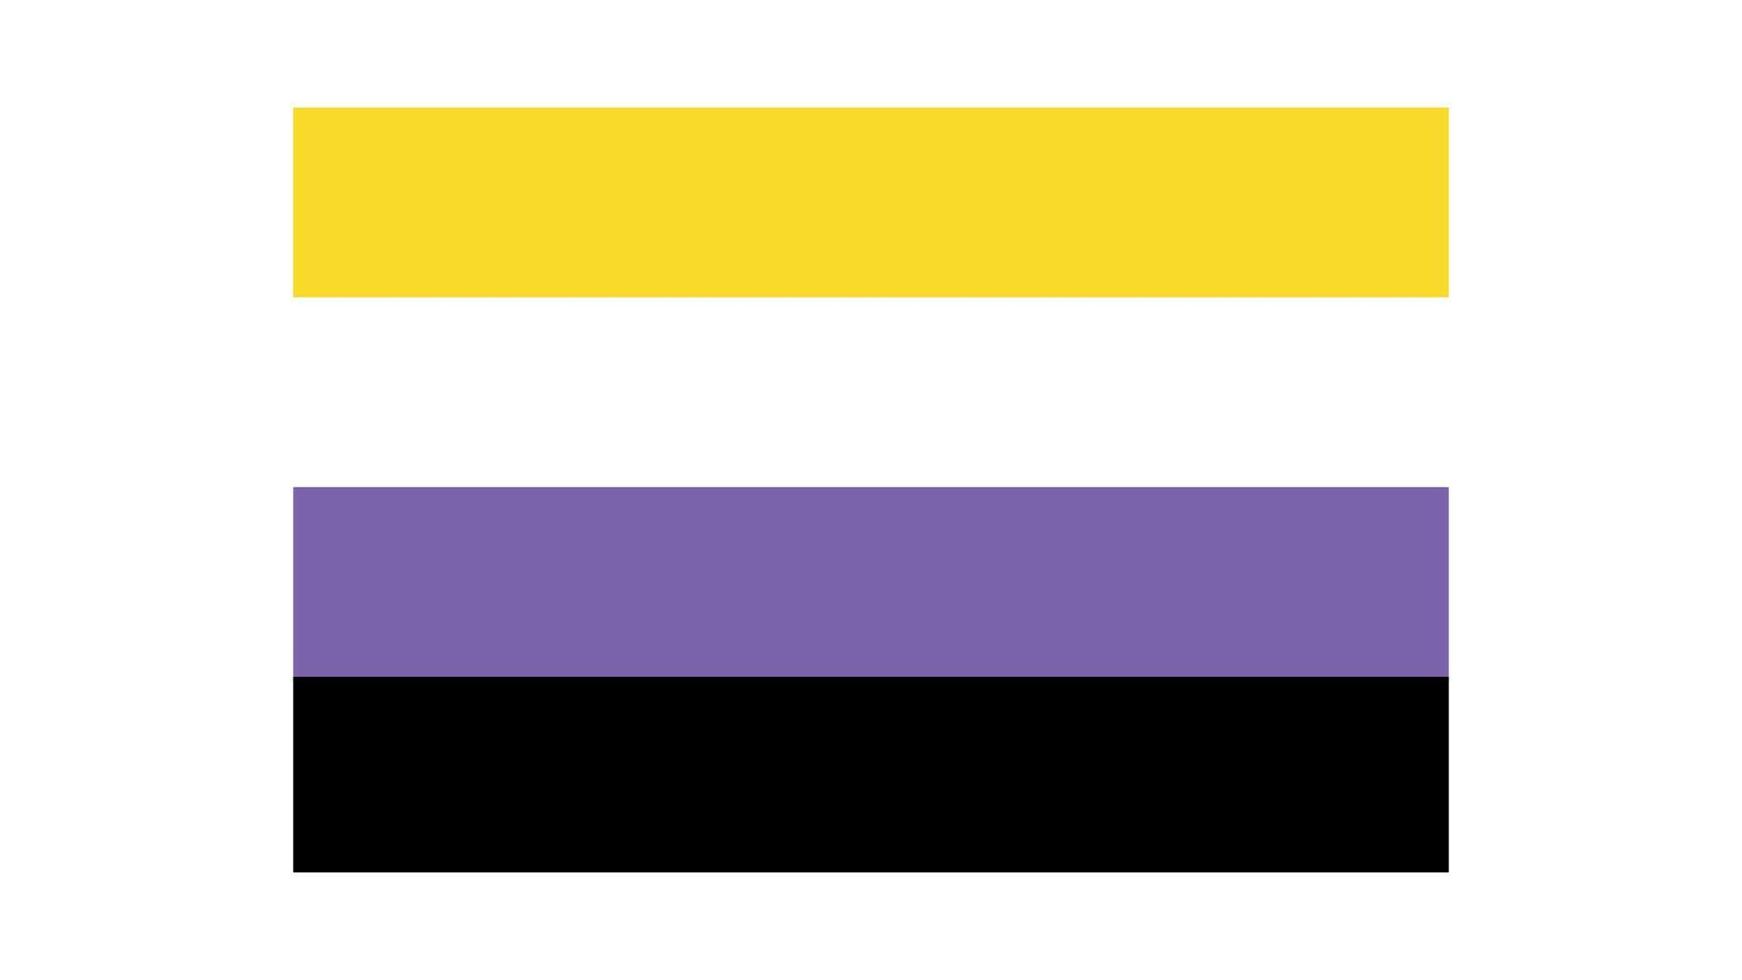 nicht-binäre Pride-Community-Flagge, lgbt-Symbol. Identität sexueller Minderheiten. Illustration vektor